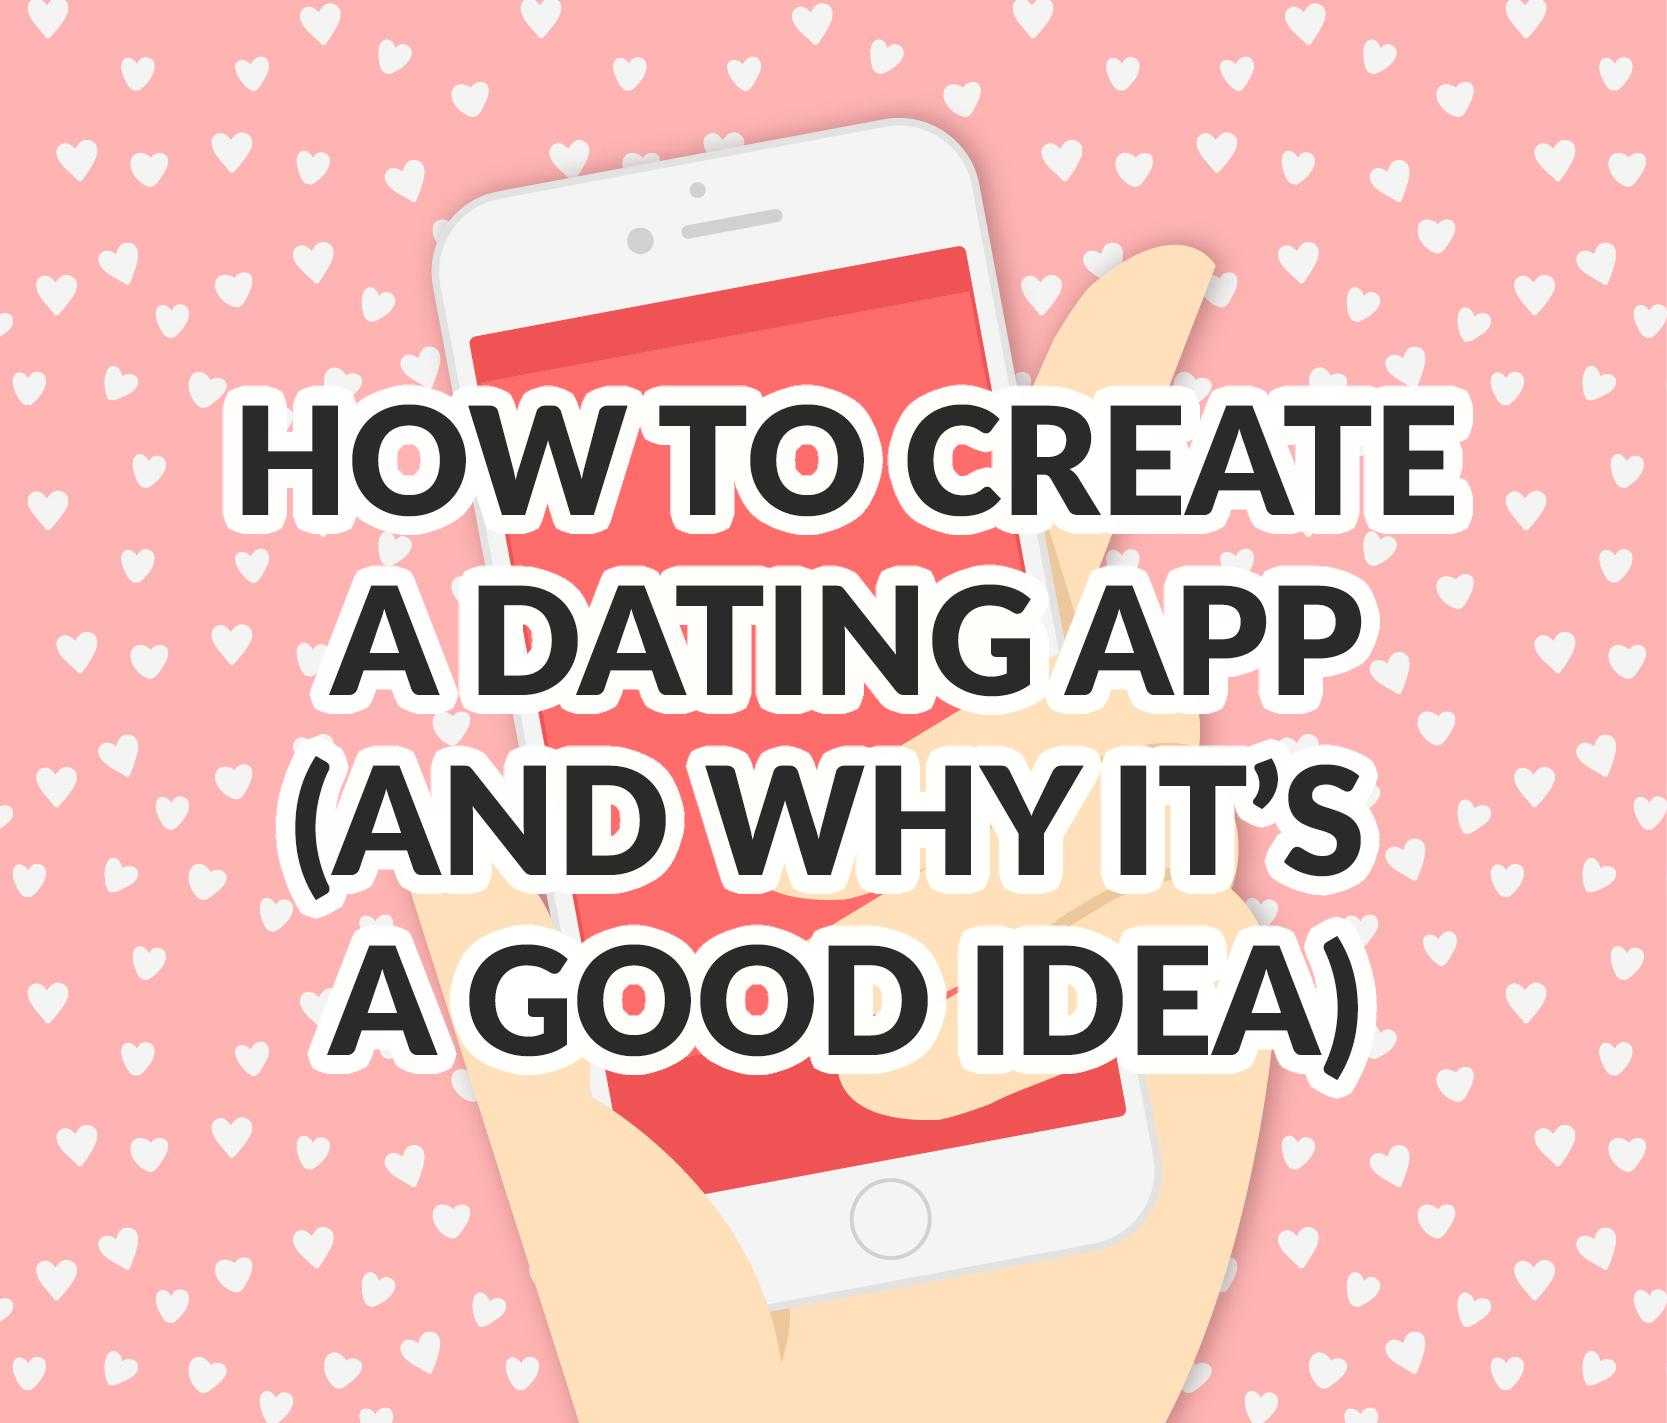 How to create a dating app by Adoriasoft Blog